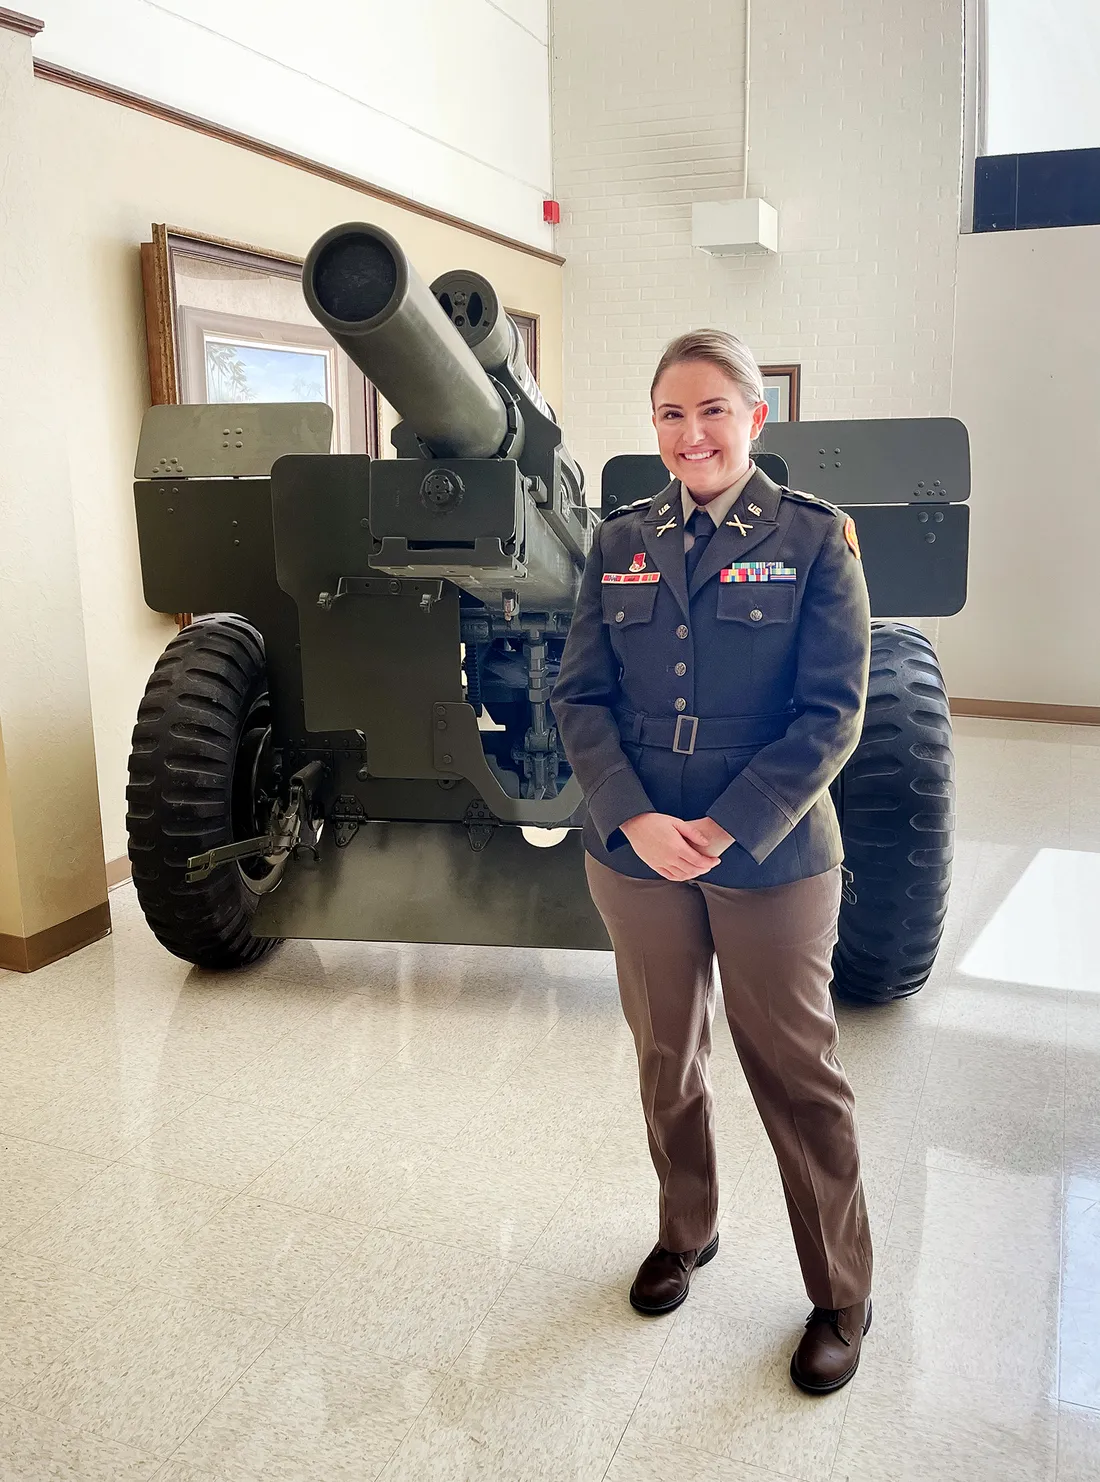 Portrait of Amanda Rylee standing beside a tank on display indoors.